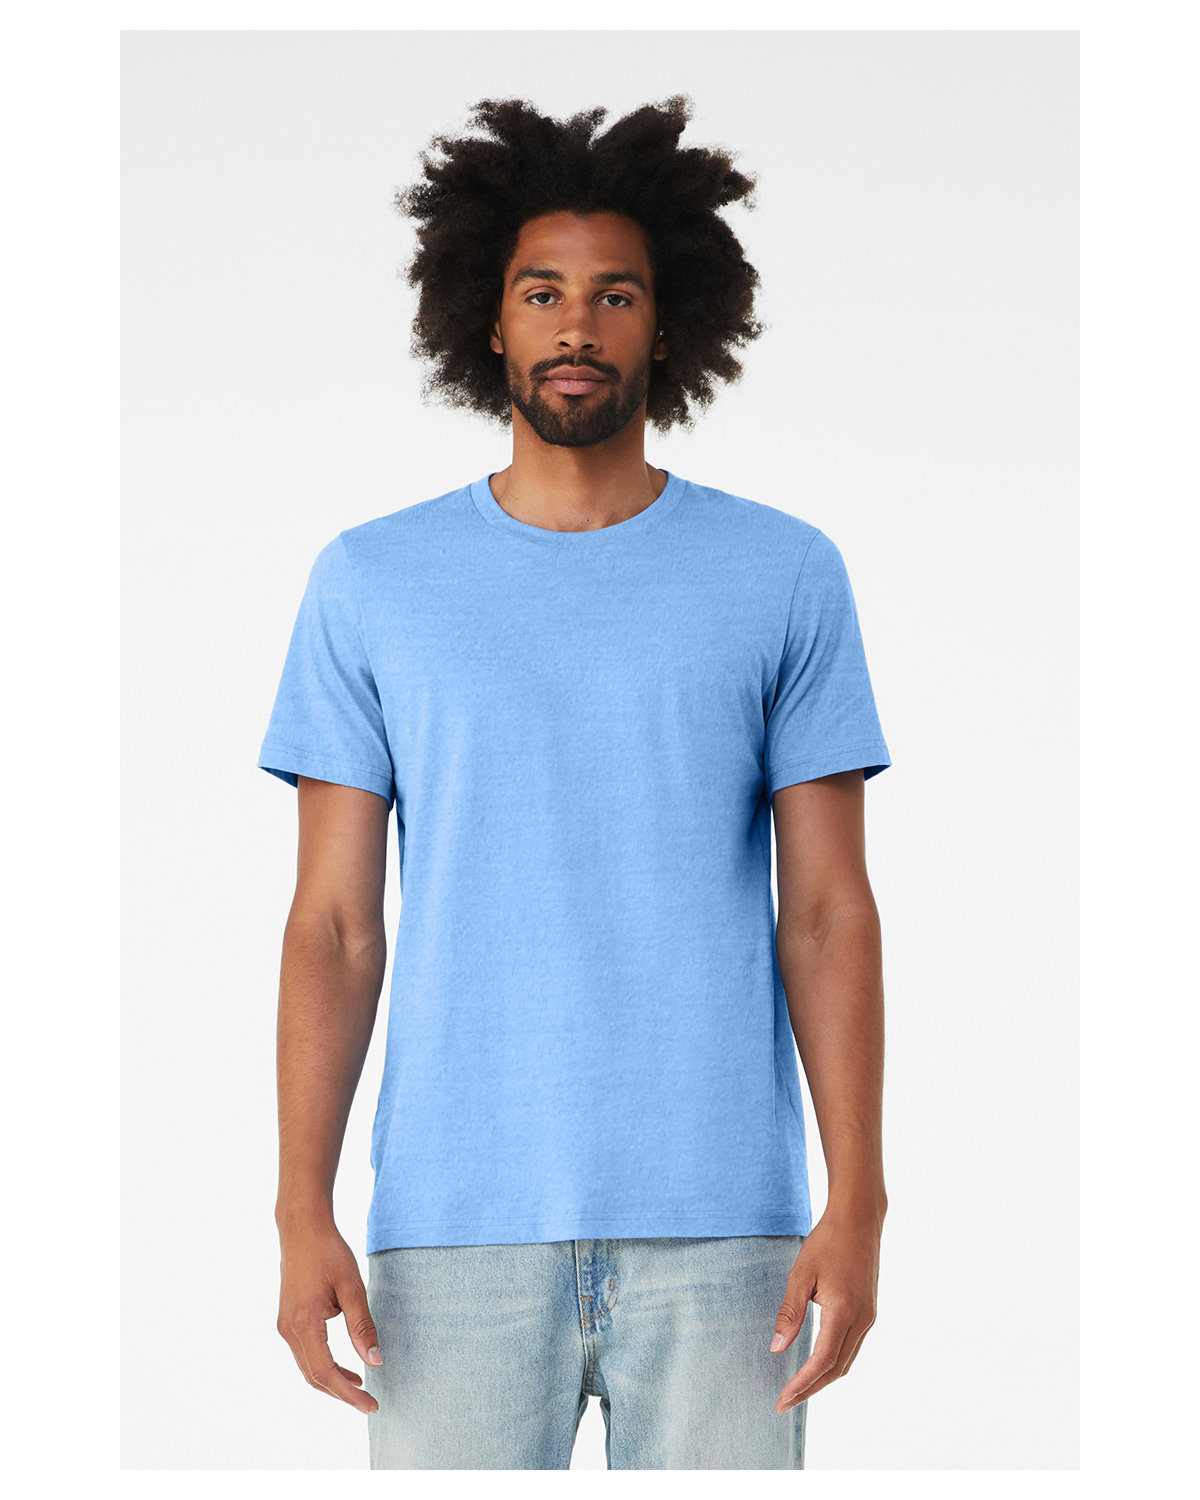 Bella + Canvas Unisex Jersey T-Shirt carolina blue 